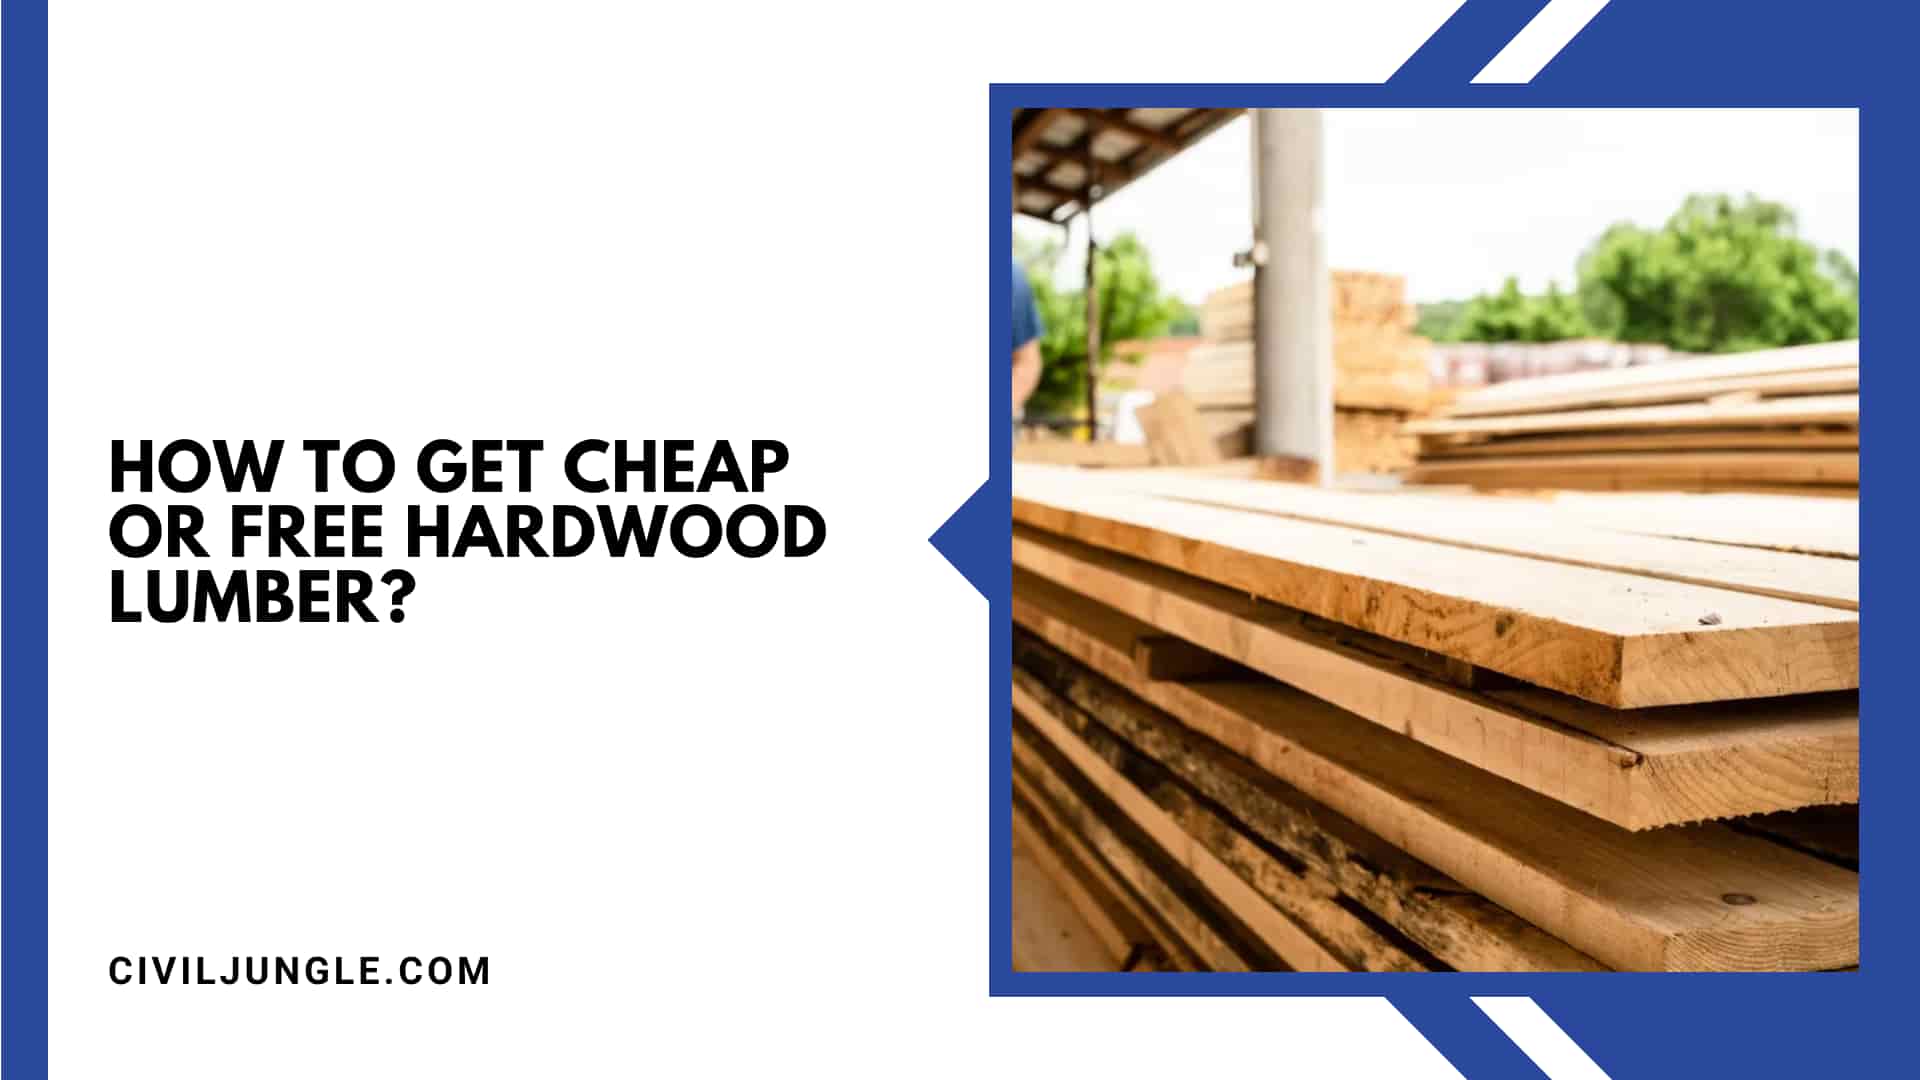 How to Get Cheap or Free Hardwood Lumber?